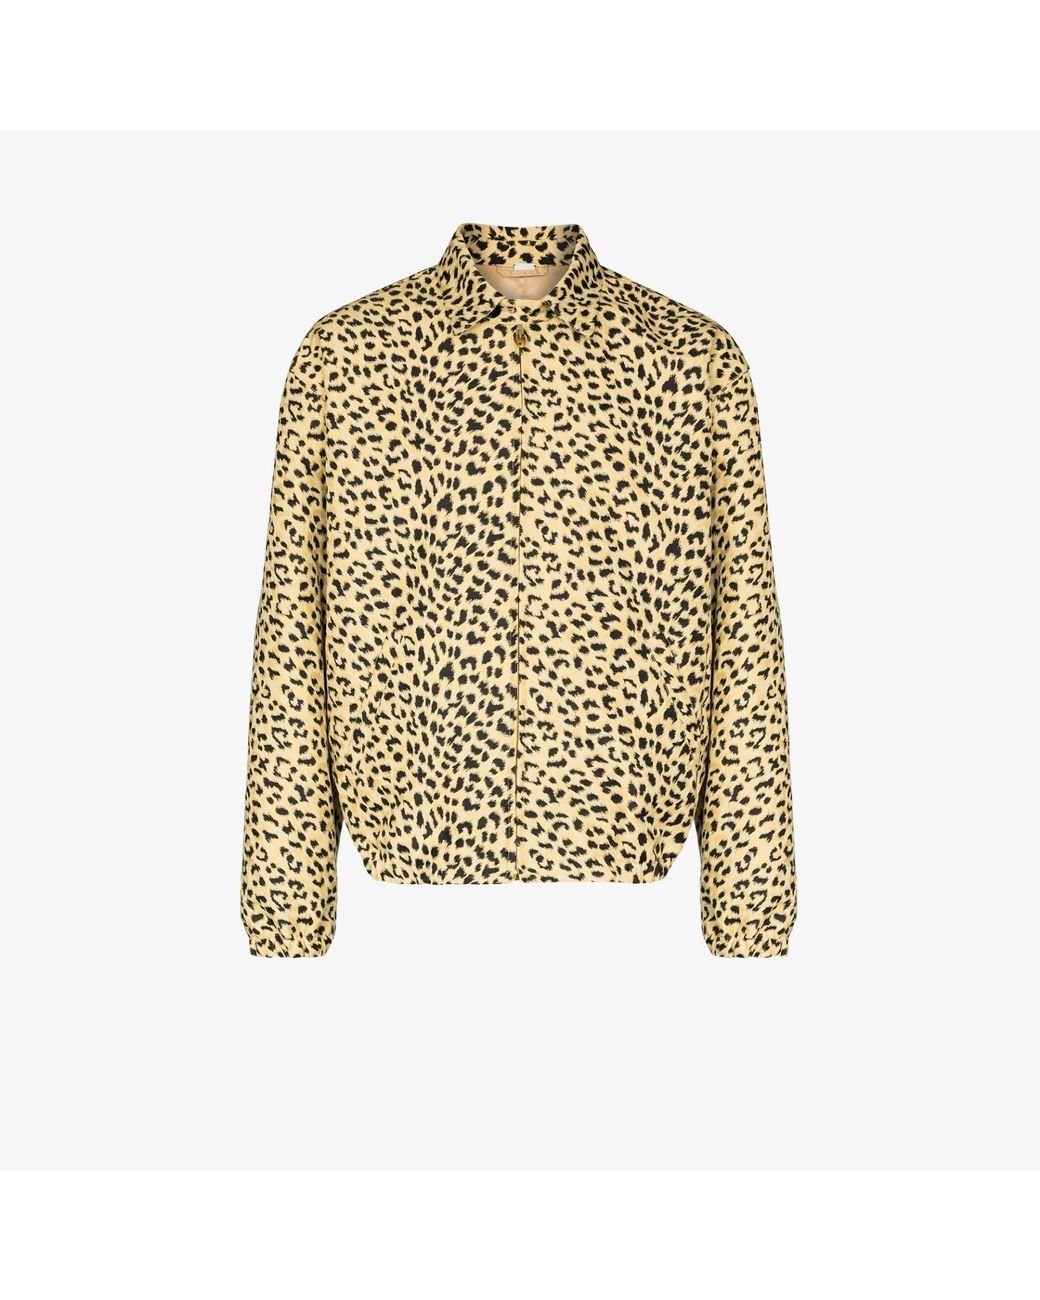 Gucci Leopard Print Bomber Jacket for Men | Lyst